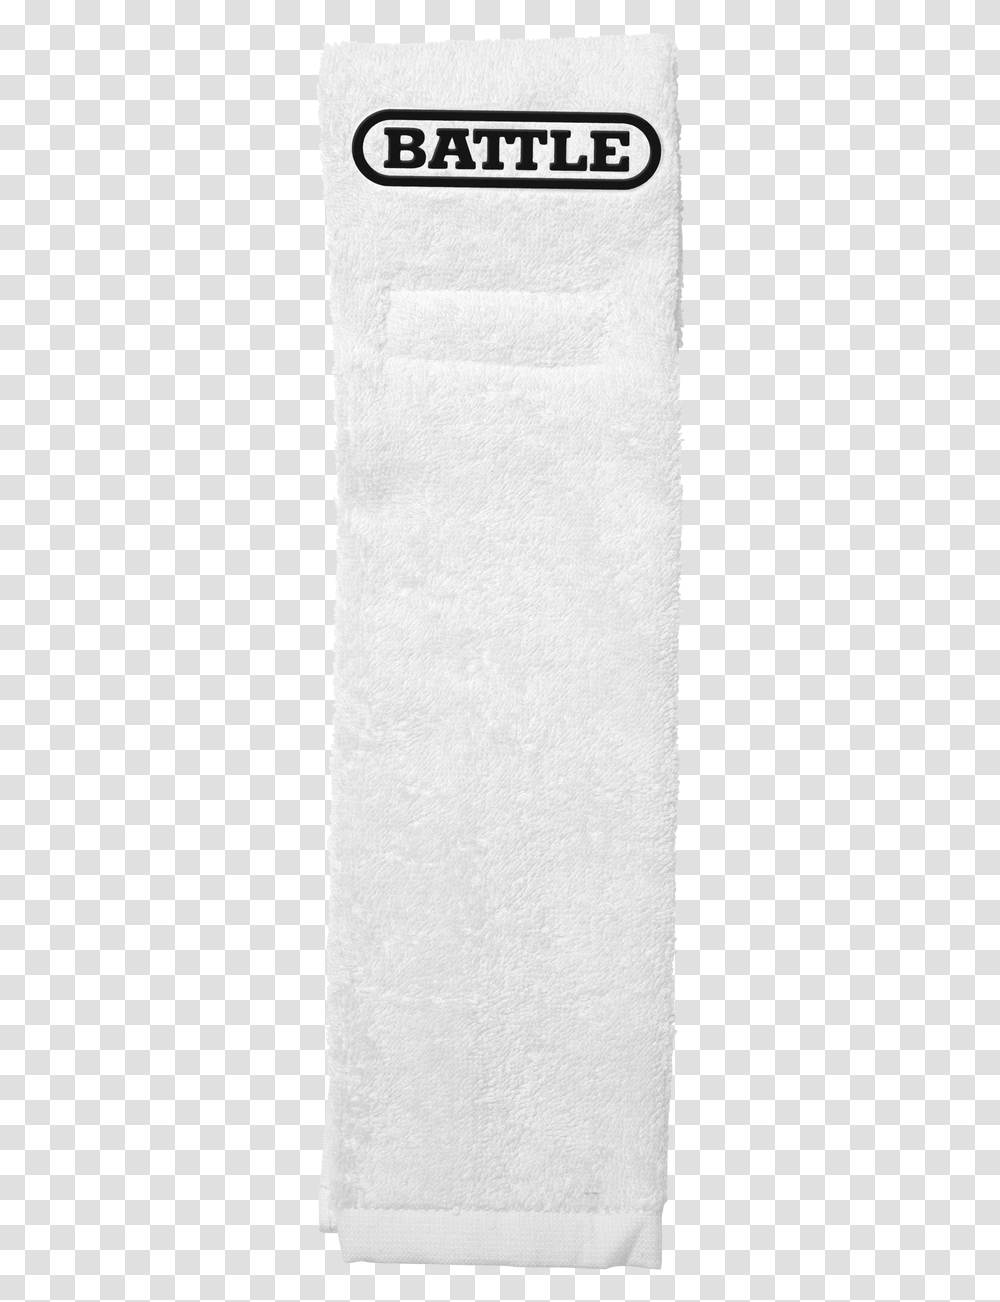 Battle Football Towel, Paper, Rug, Paper Towel Transparent Png